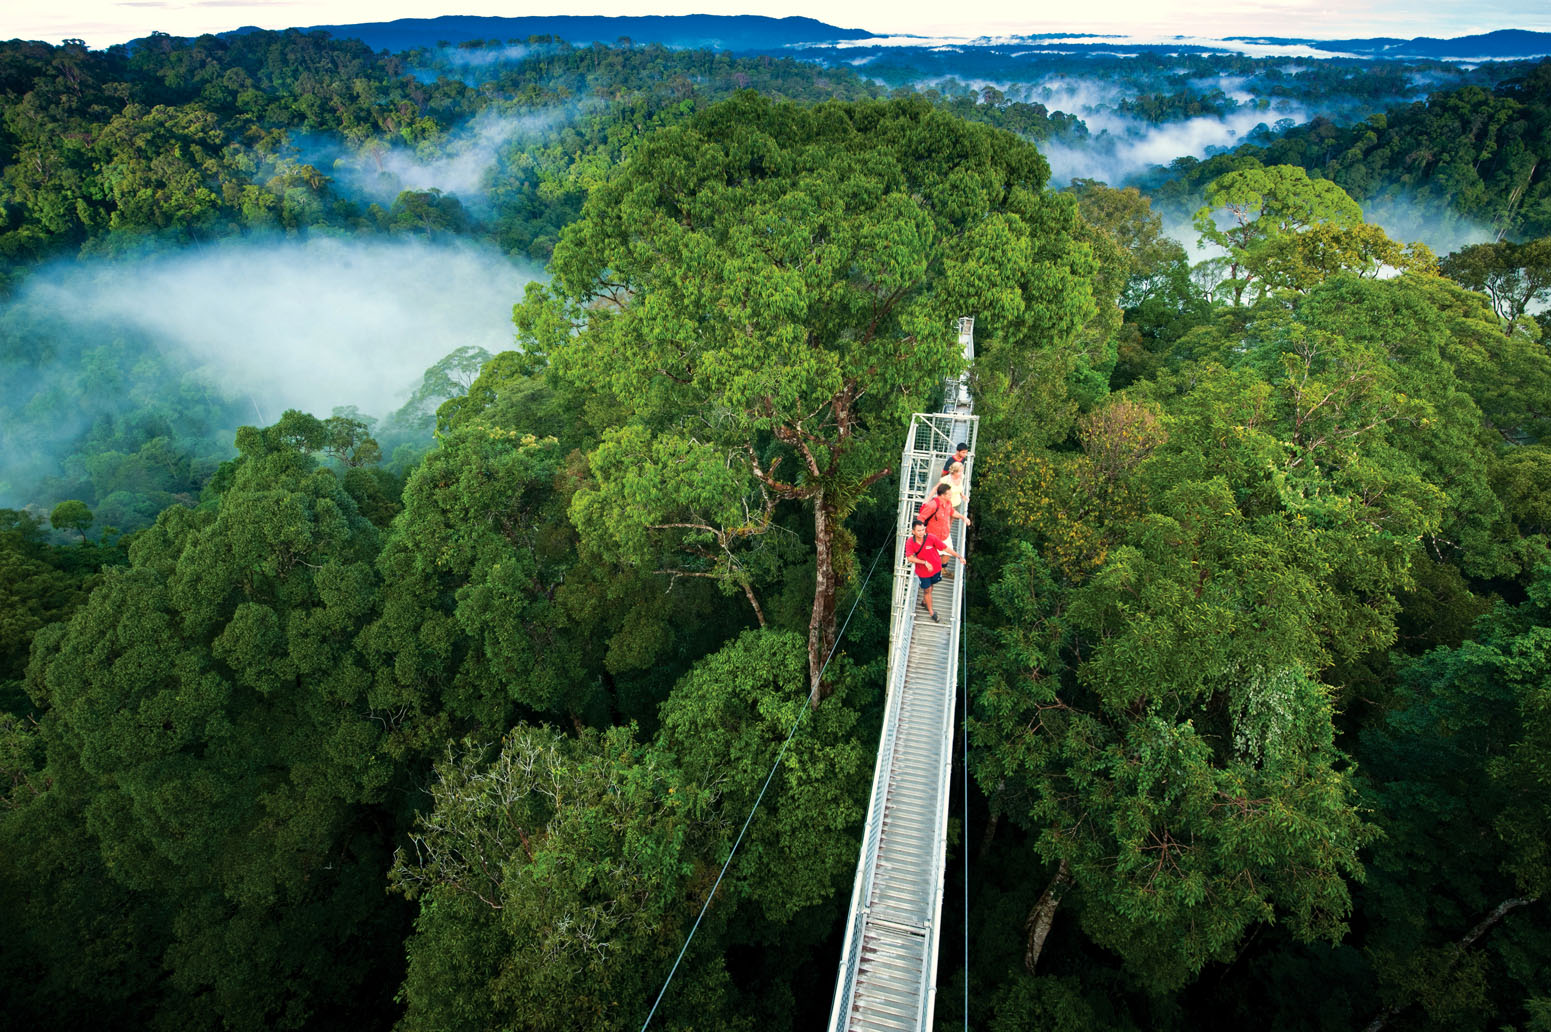 Travel to Borneo, Walk above a rainforest in Borneo, Borneo Rainforest, Borneo Activities, Borneo hikes, Borneo Tour, Borneo Adventures